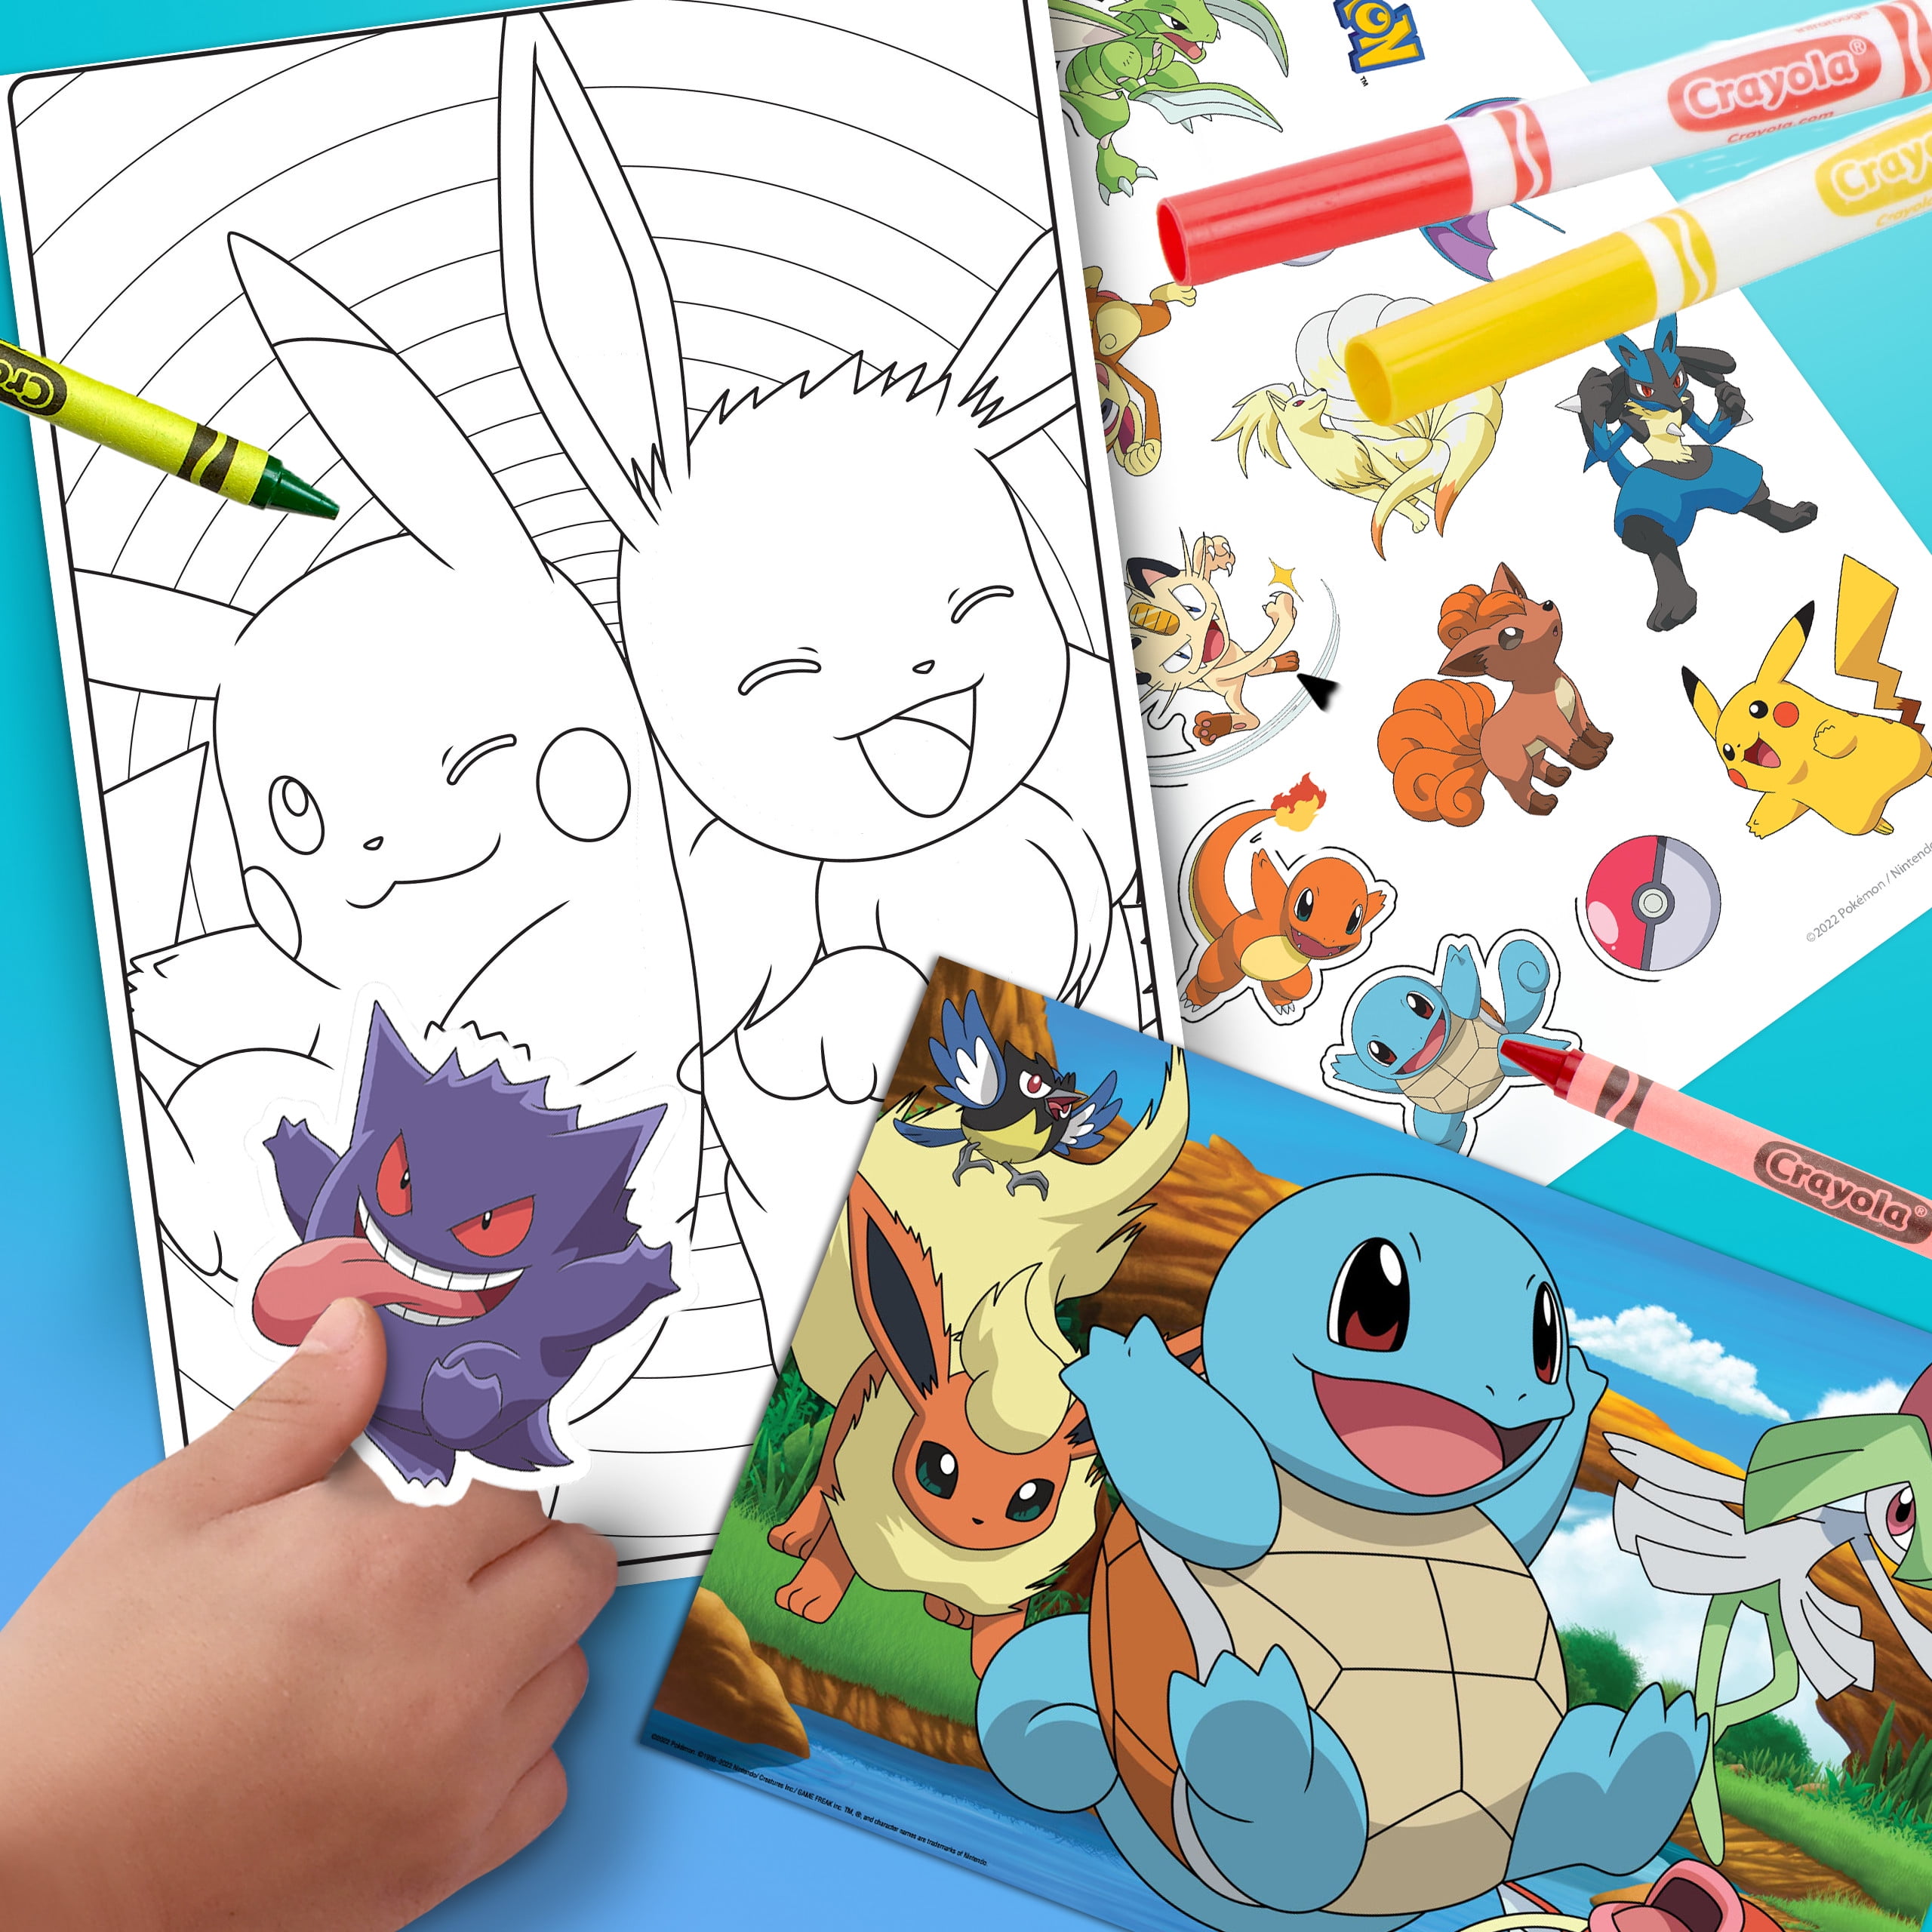 Crayola Pokémon Imagination Art Set (115pcs), Kids Art Kit, Includes  Pokemon Coloring Pages, Pokemon Gifts for Kids, Ages 5+